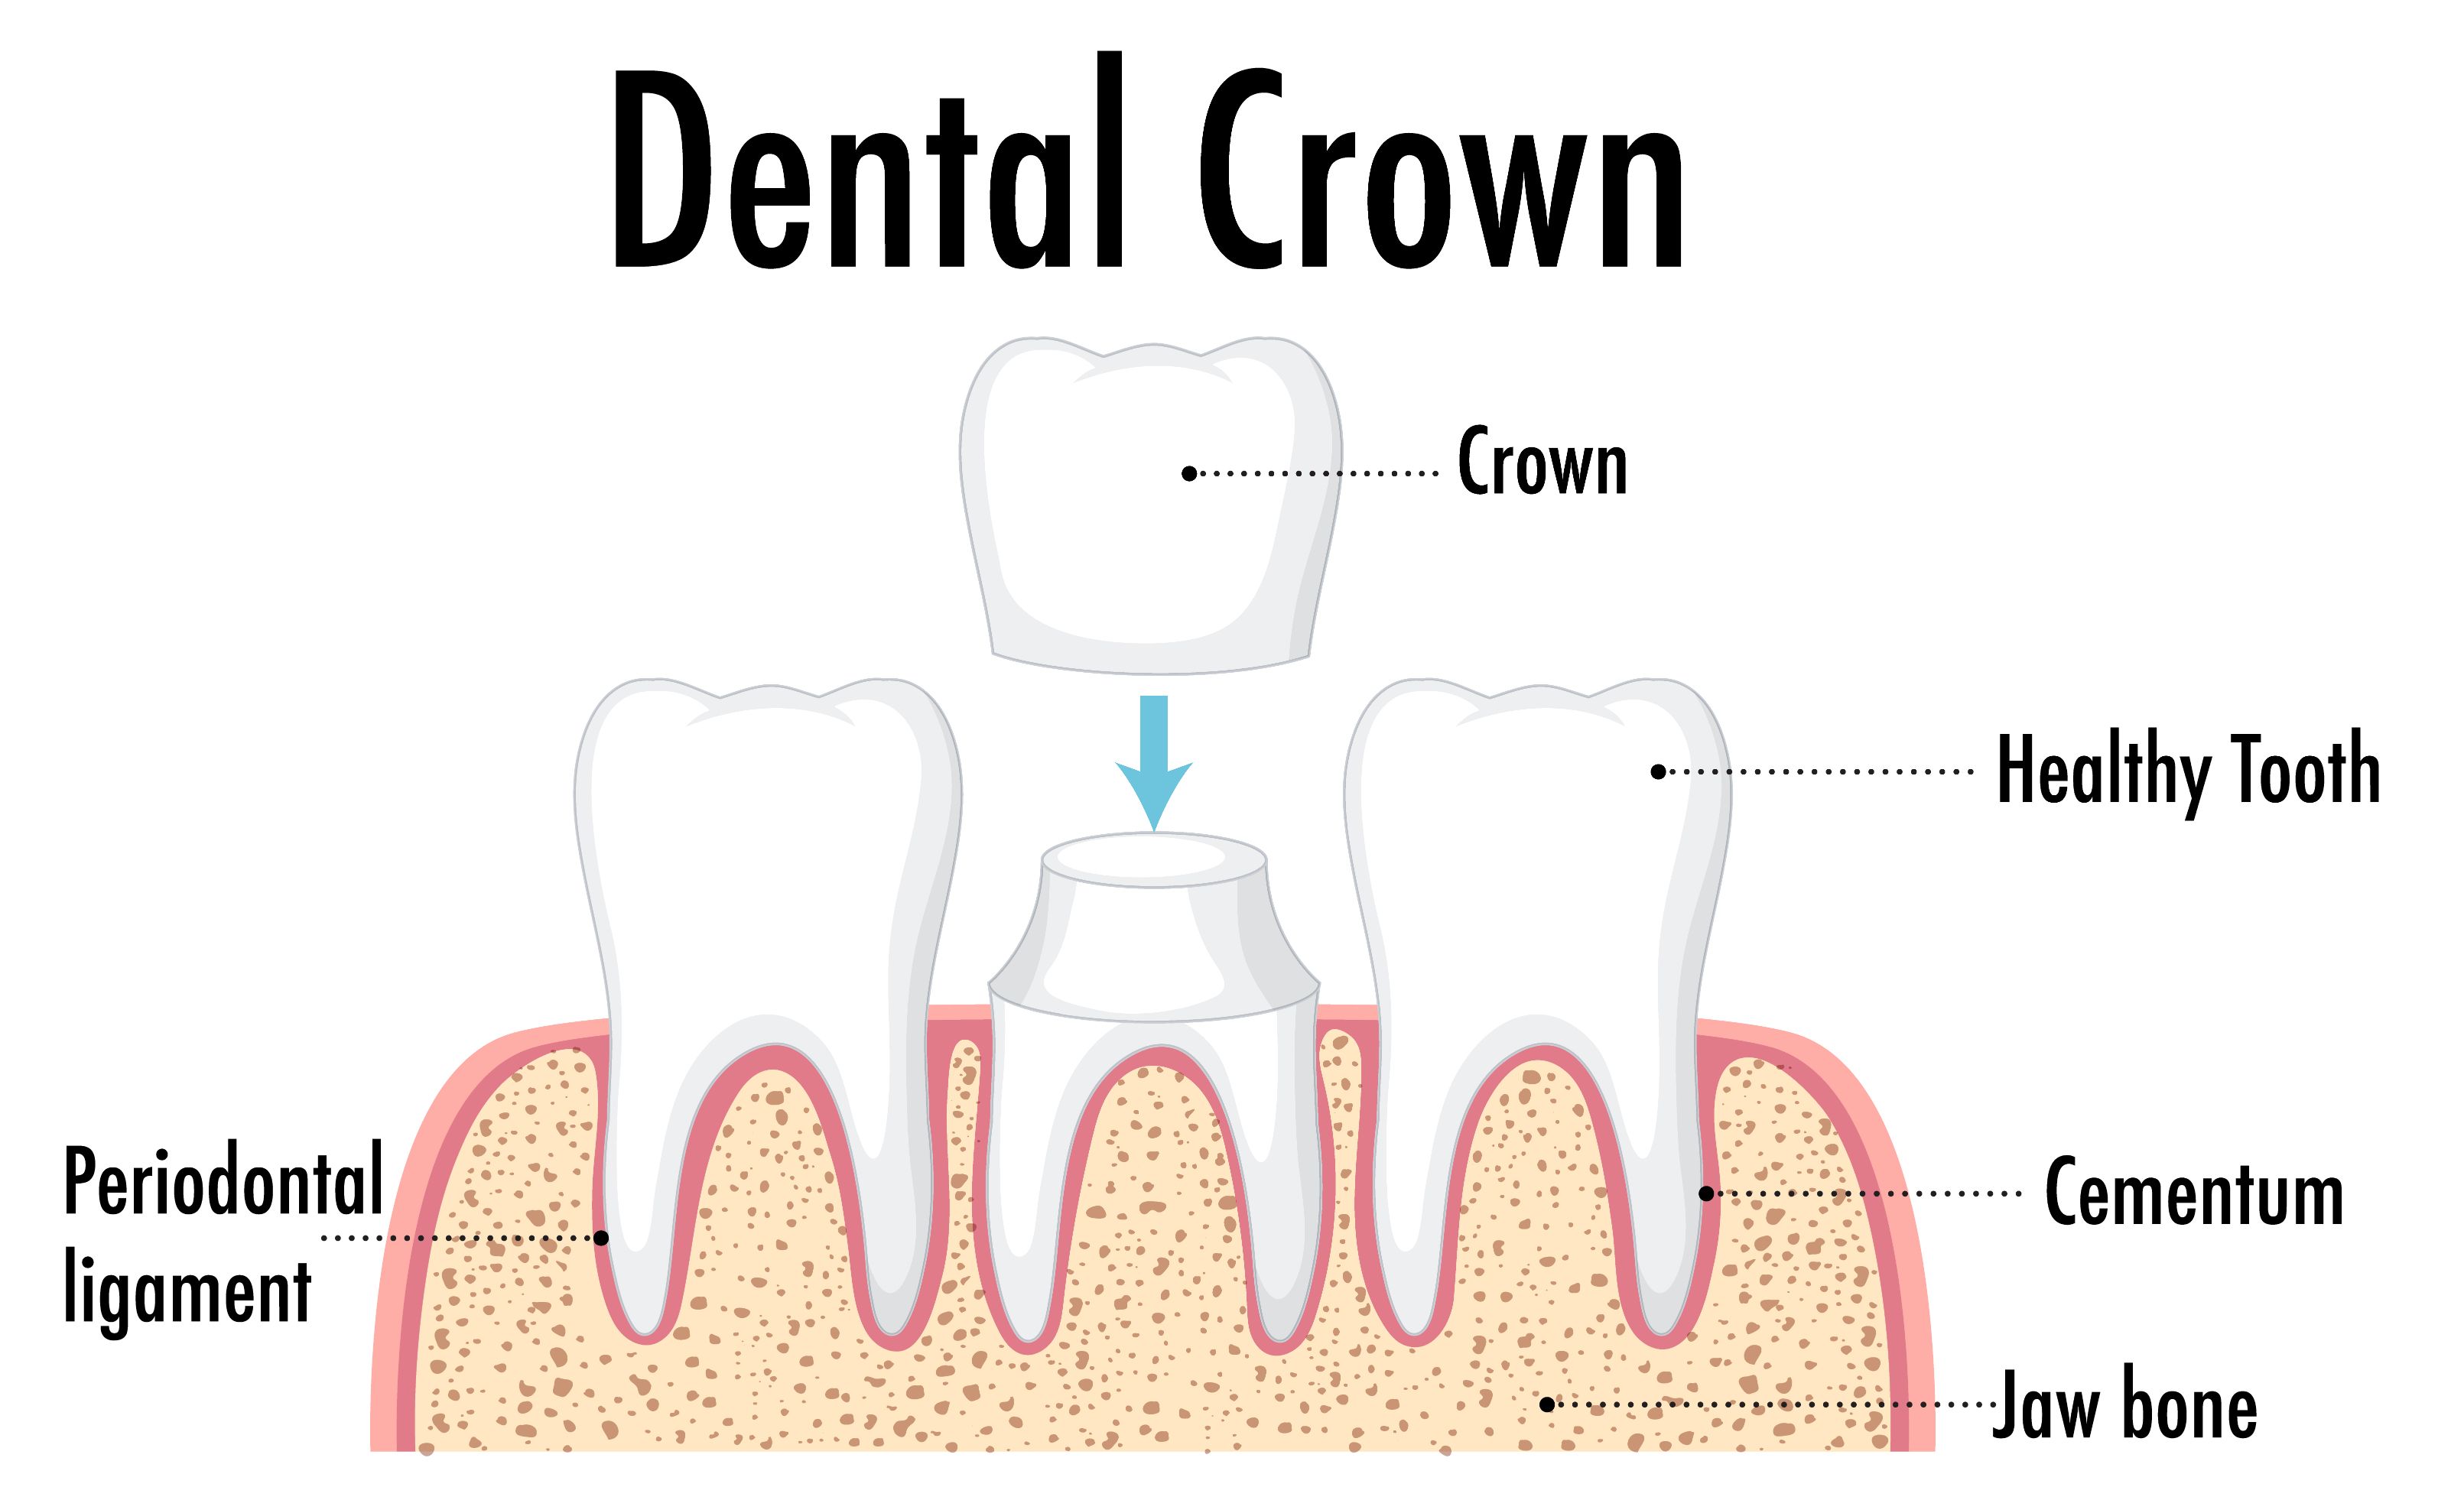 dental crowns and bridges